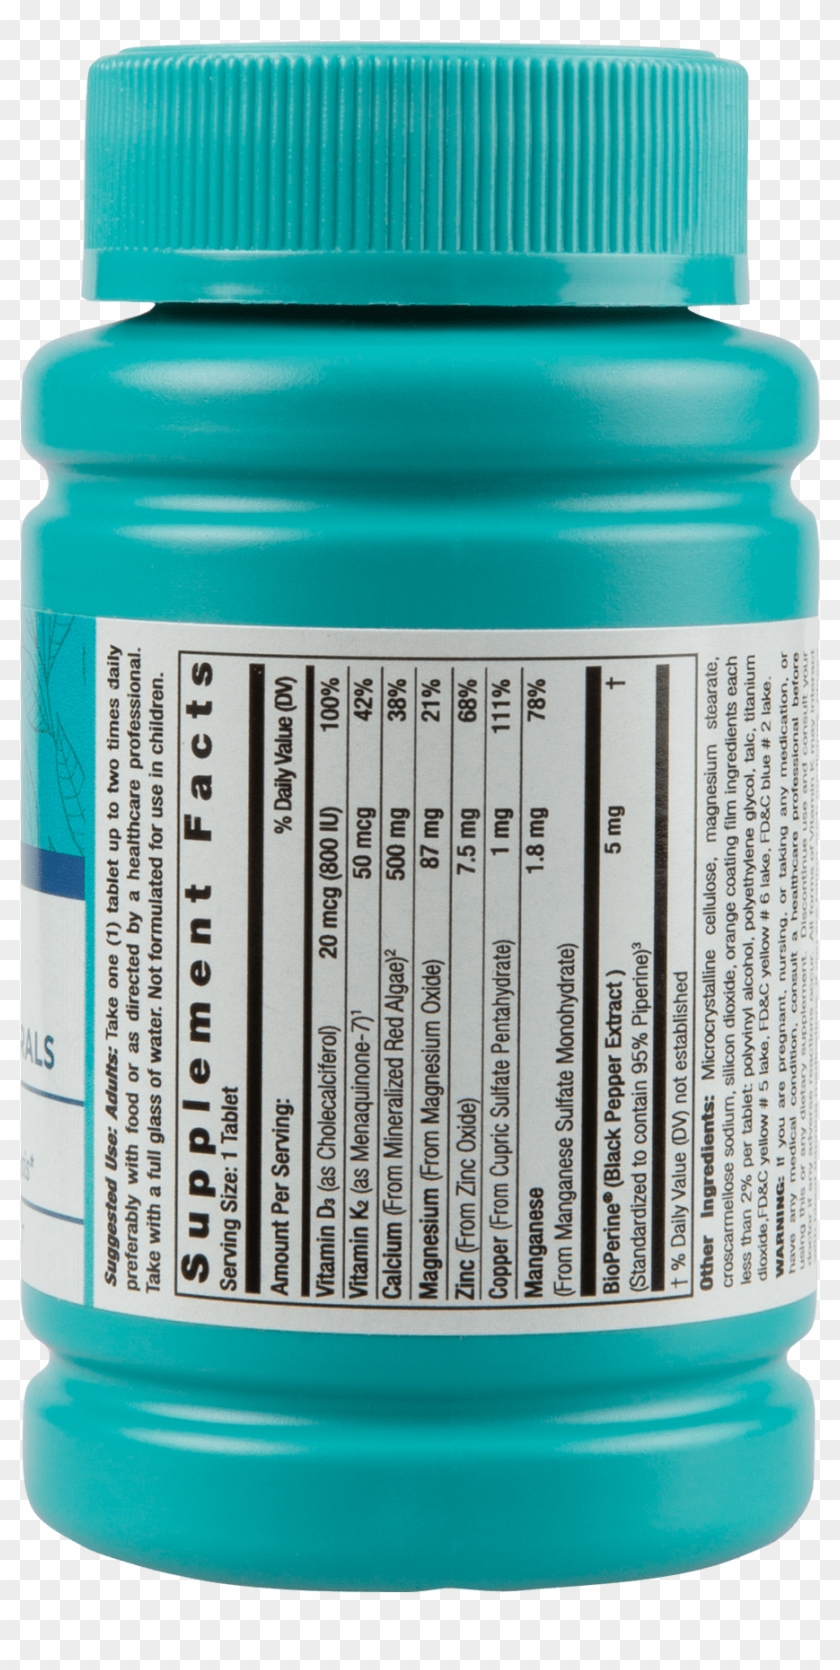 Calcium Supplements - Bottle Clipart #4678624